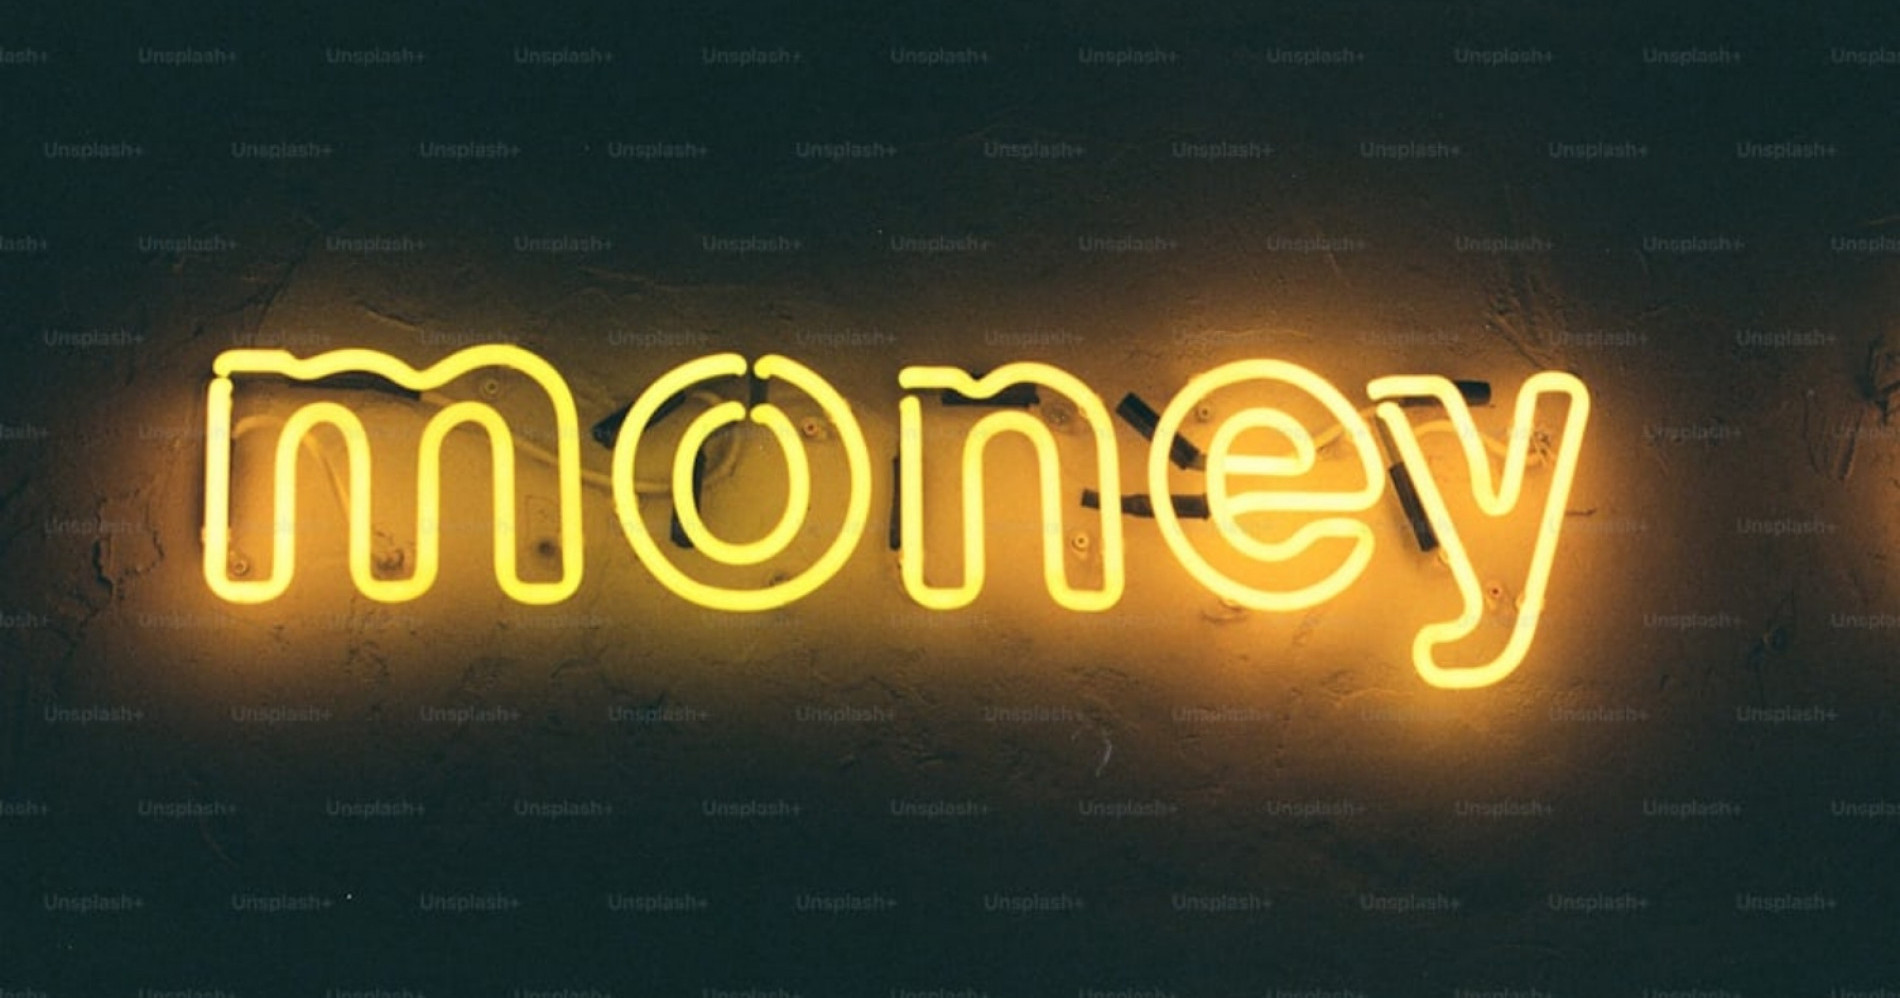 Money (Sumber: www.unsplash.com)